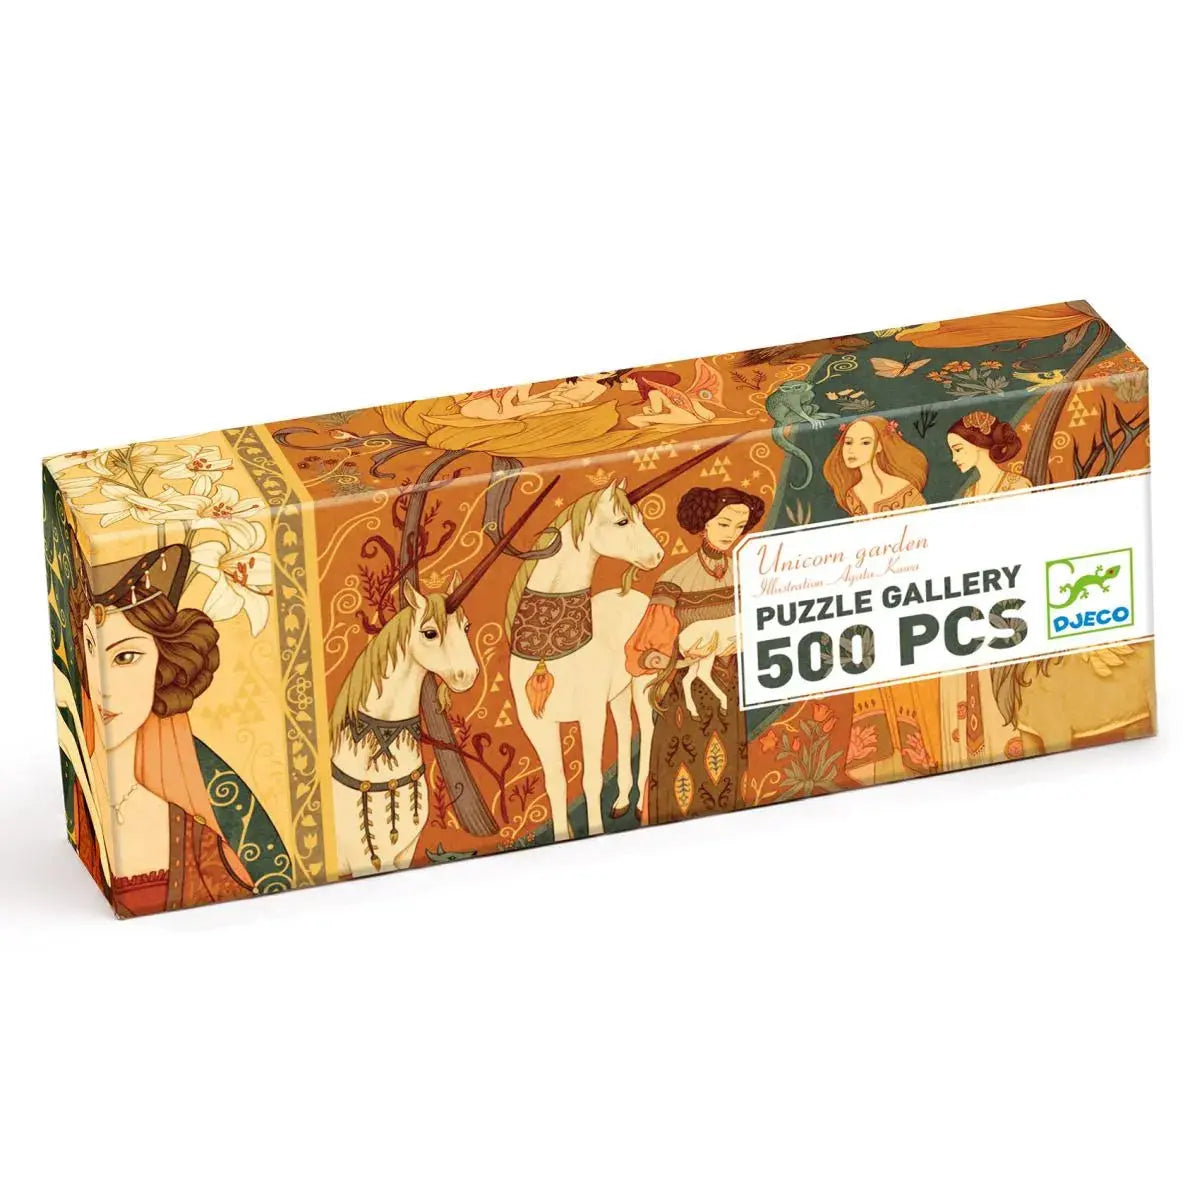 Puzzle Gallery: Unicorn Garden - 500 Teile Djeco